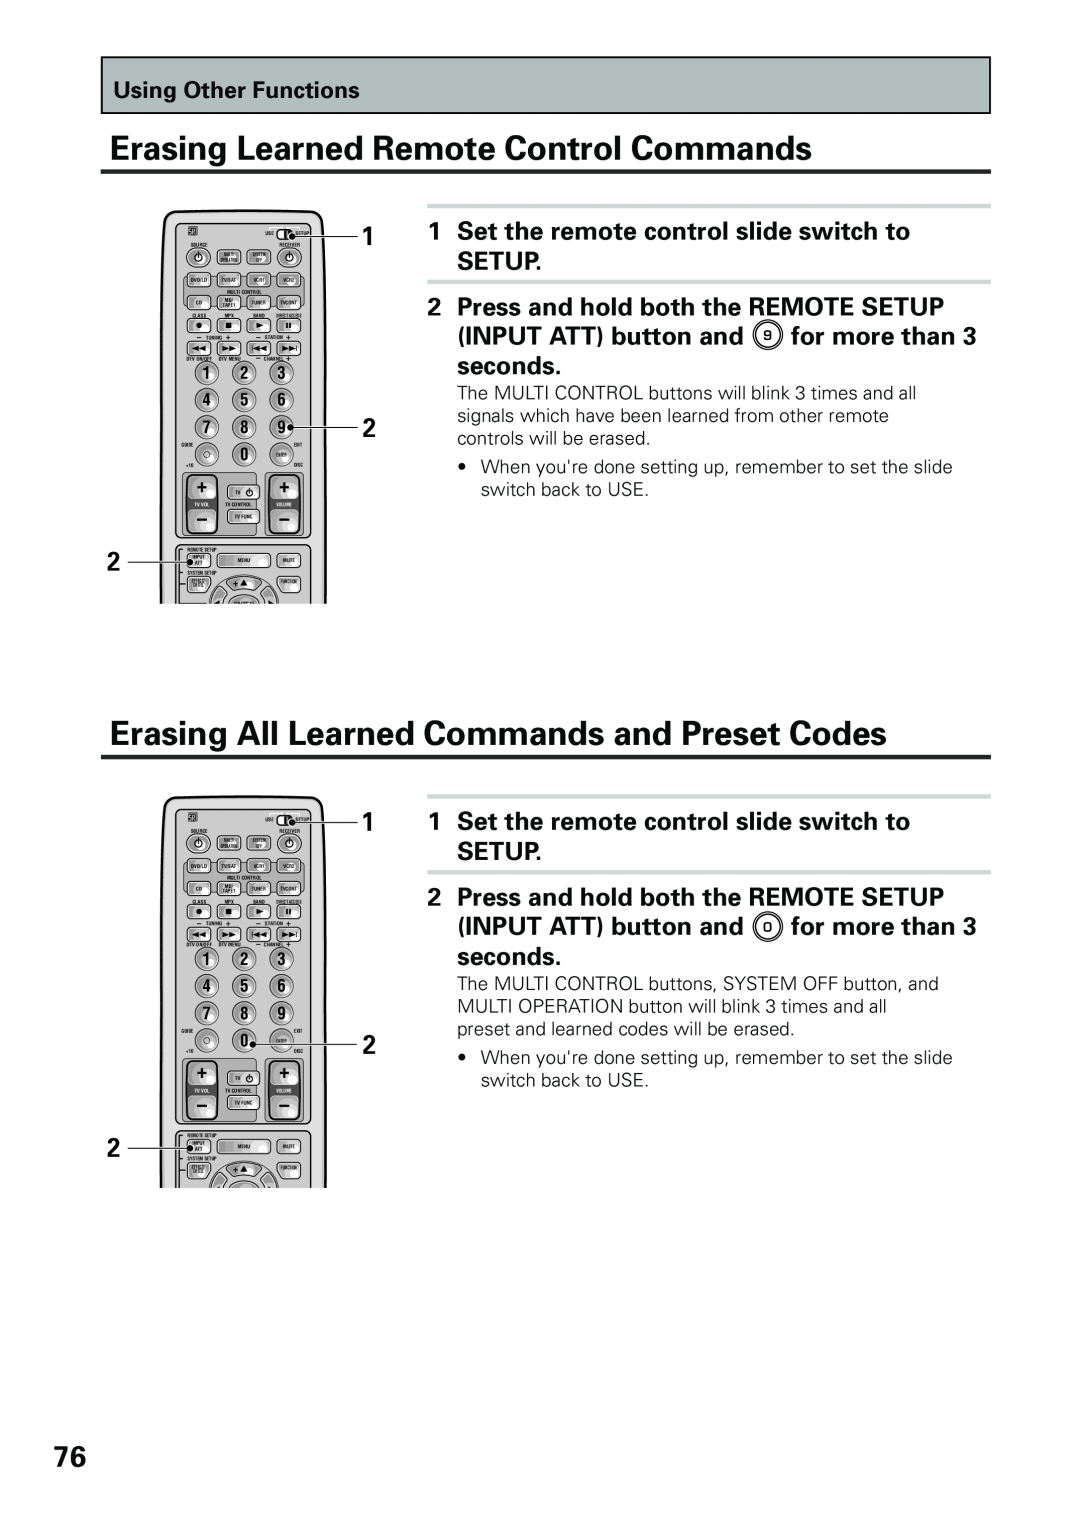 Pioneer VSX-D909S manual Erasing Learned Remote Control Commands, Erasing All Learned Commands and Preset Codes, seconds 